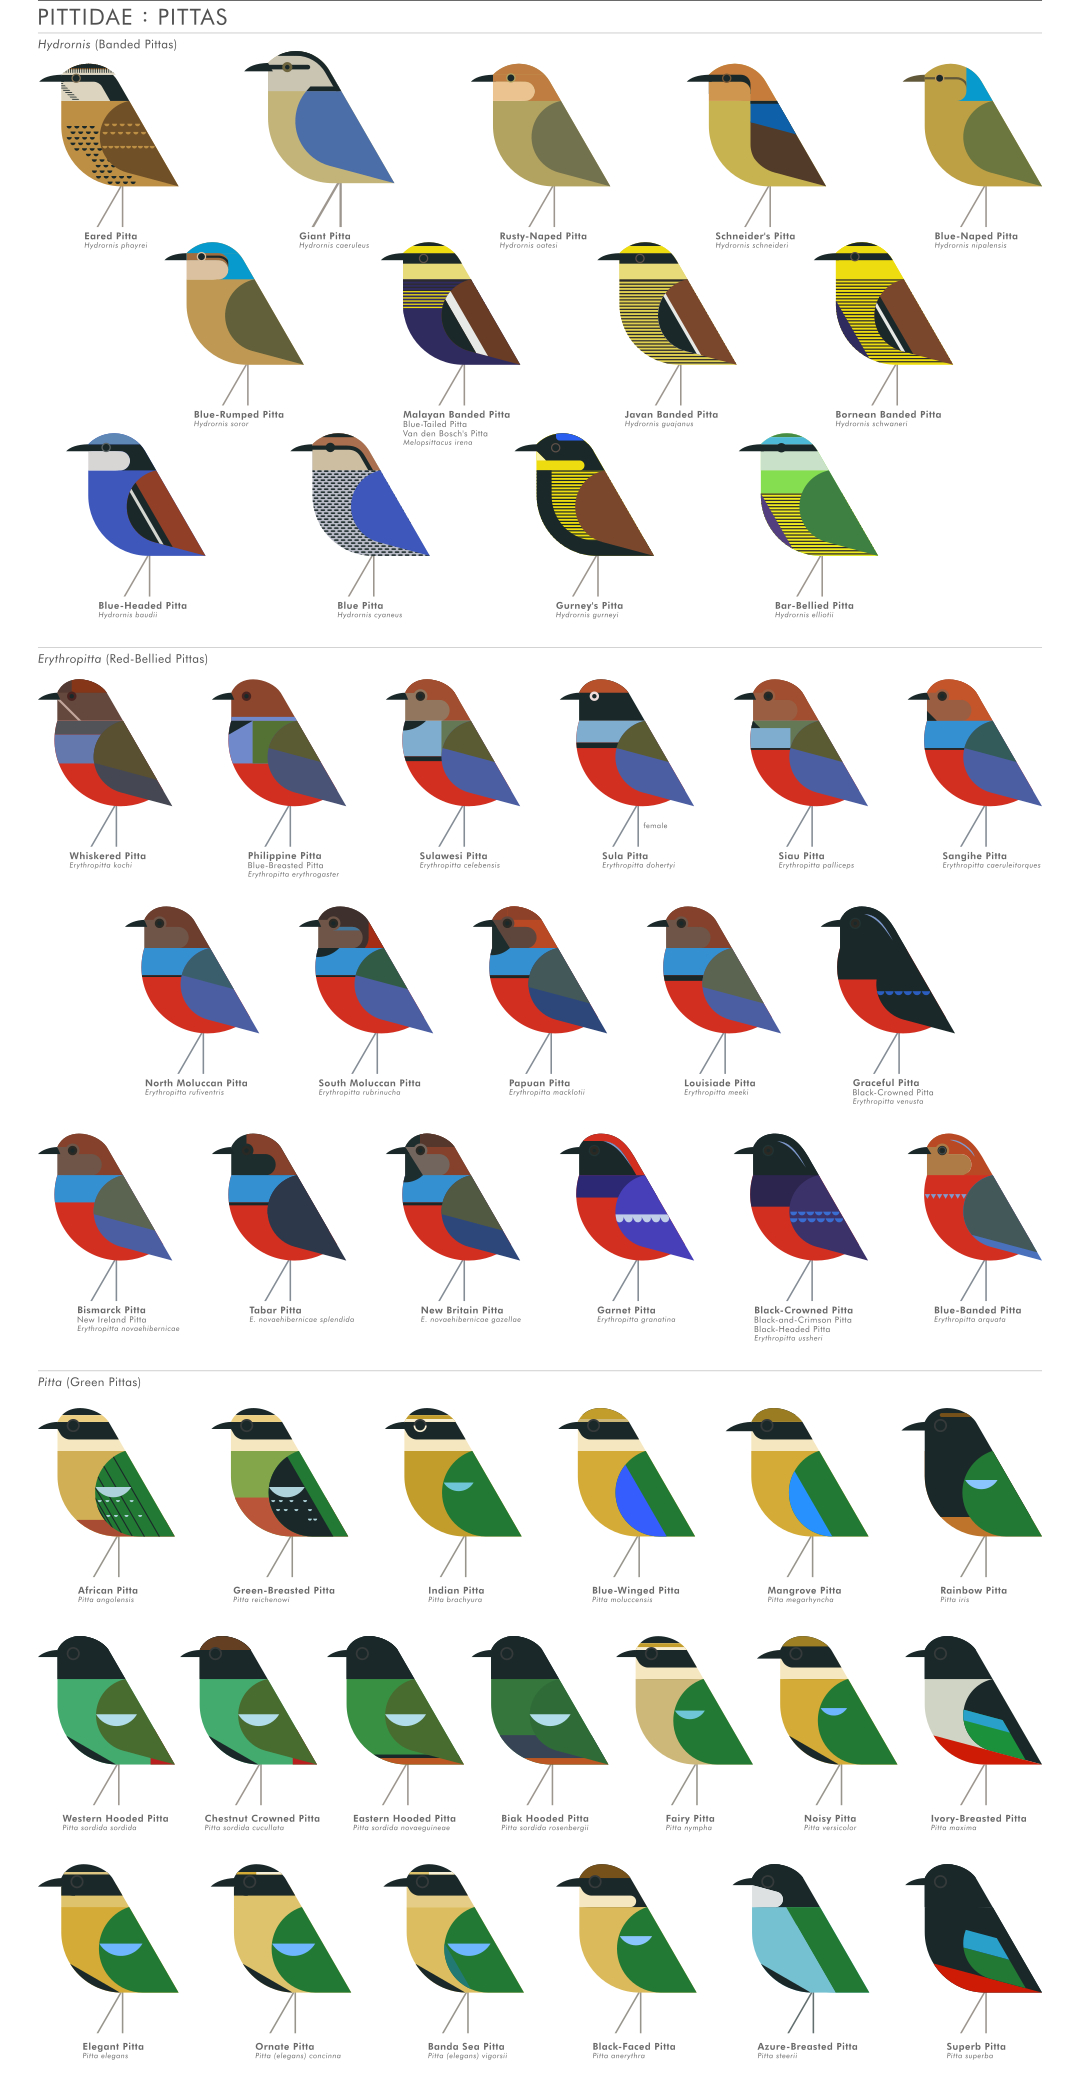 scott partridge - AVE - avian vector encyclopedia - pittas - pittidae - bird vector art